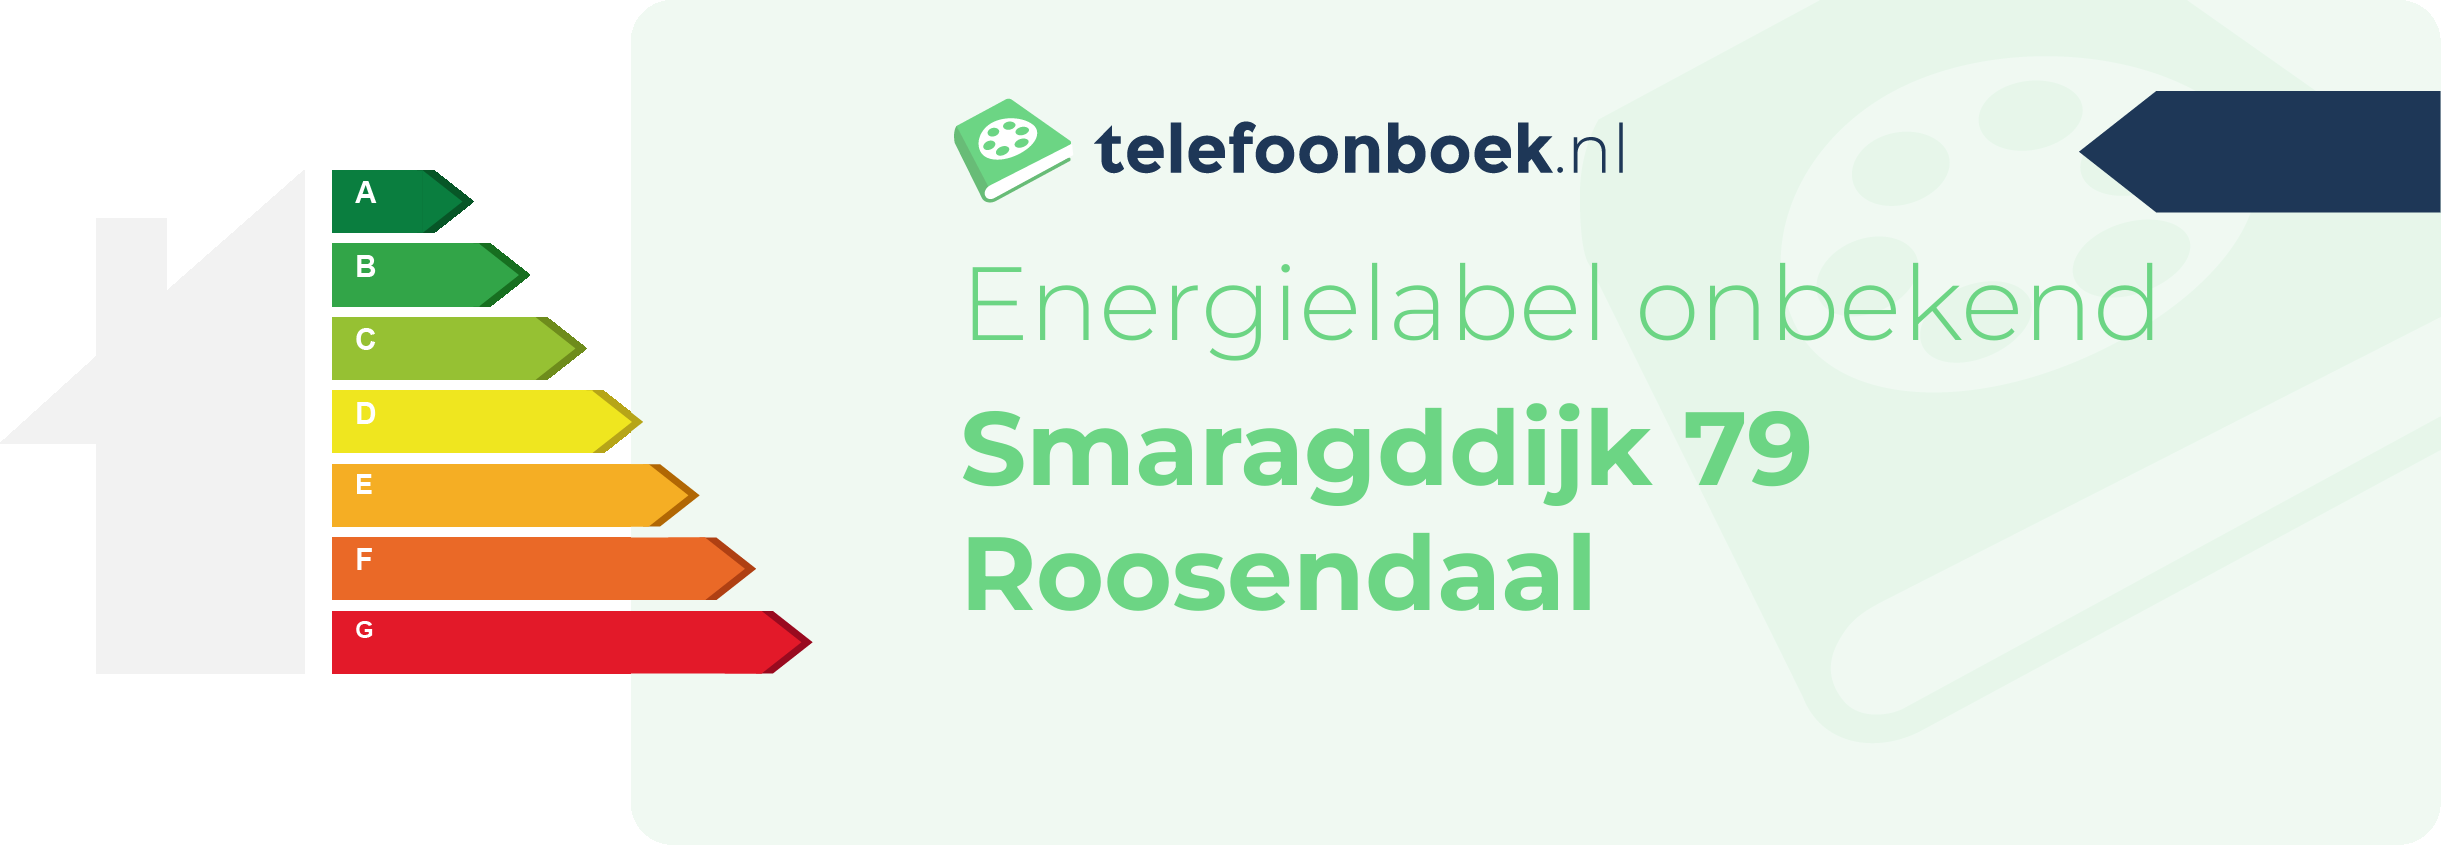 Energielabel Smaragddijk 79 Roosendaal